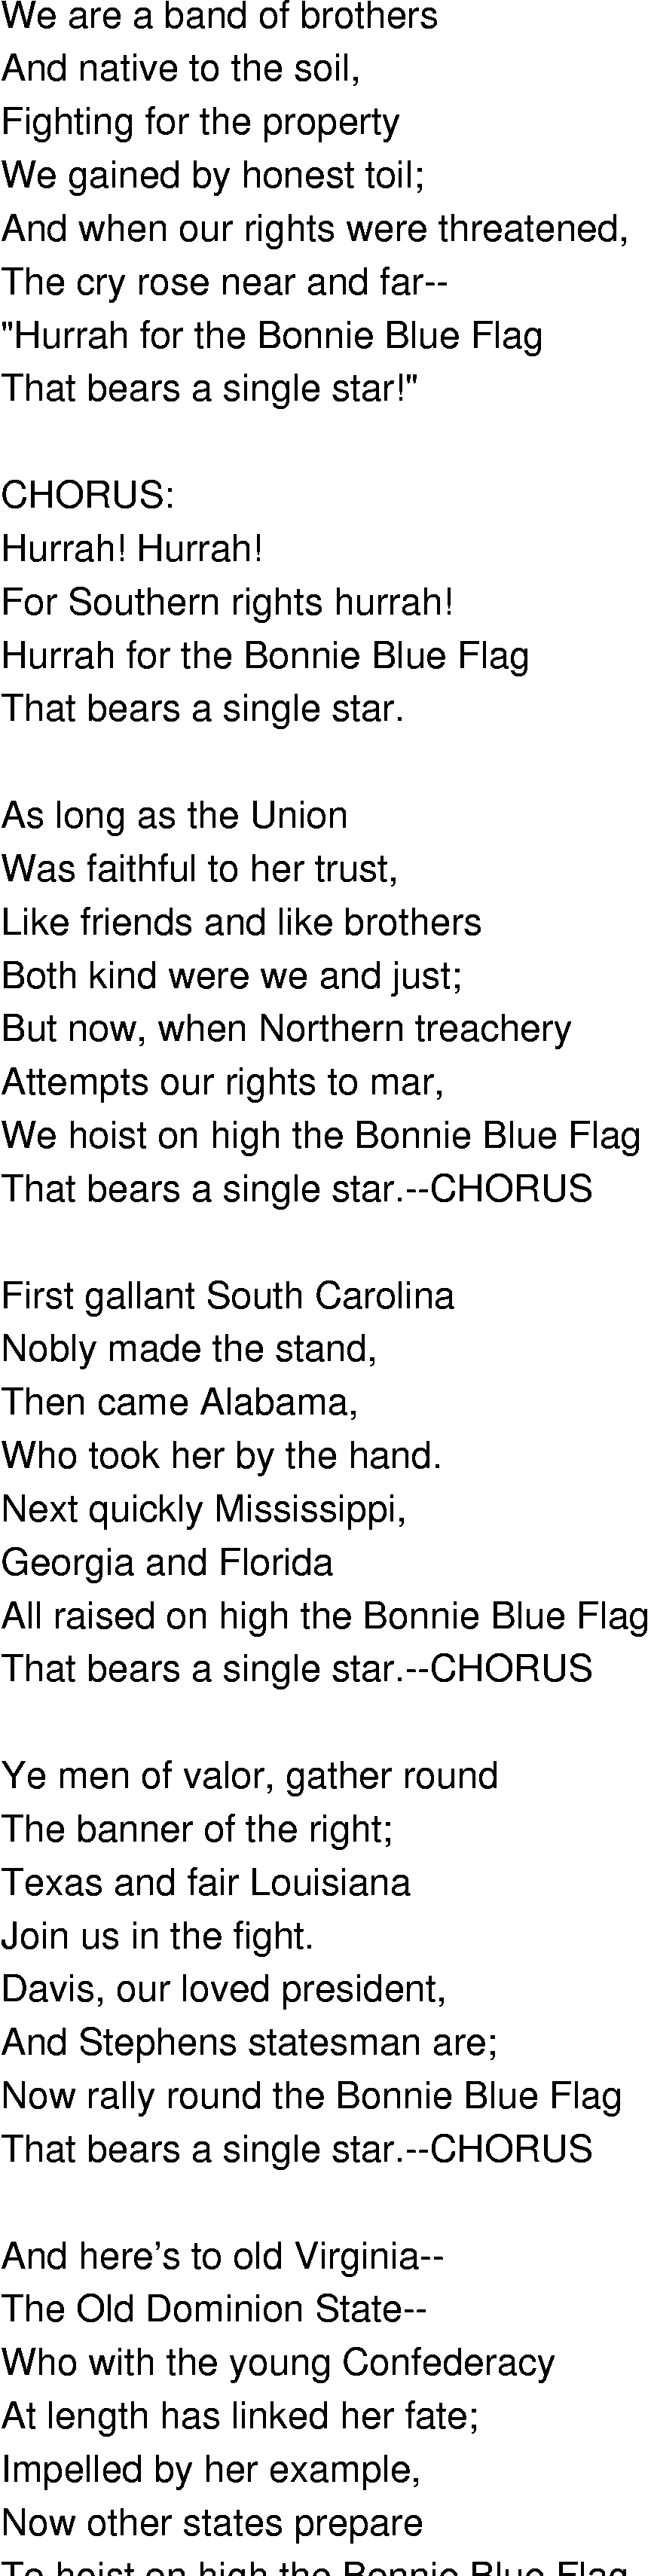 Old-Time Song Lyrics - Bonnie Blue Flag